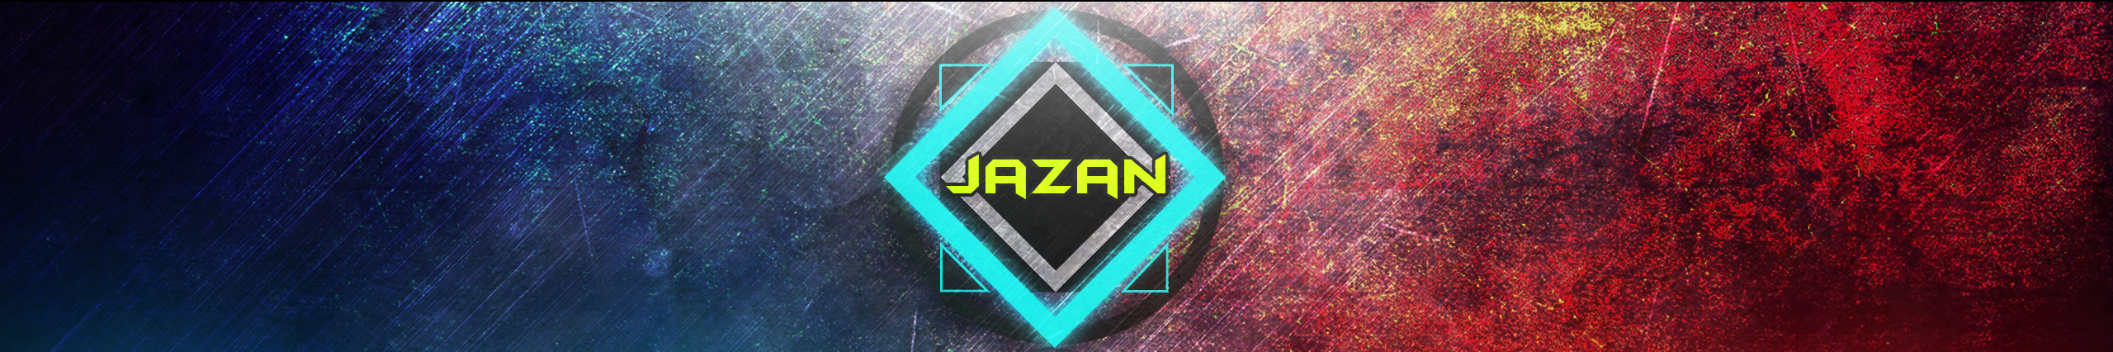 Jazan